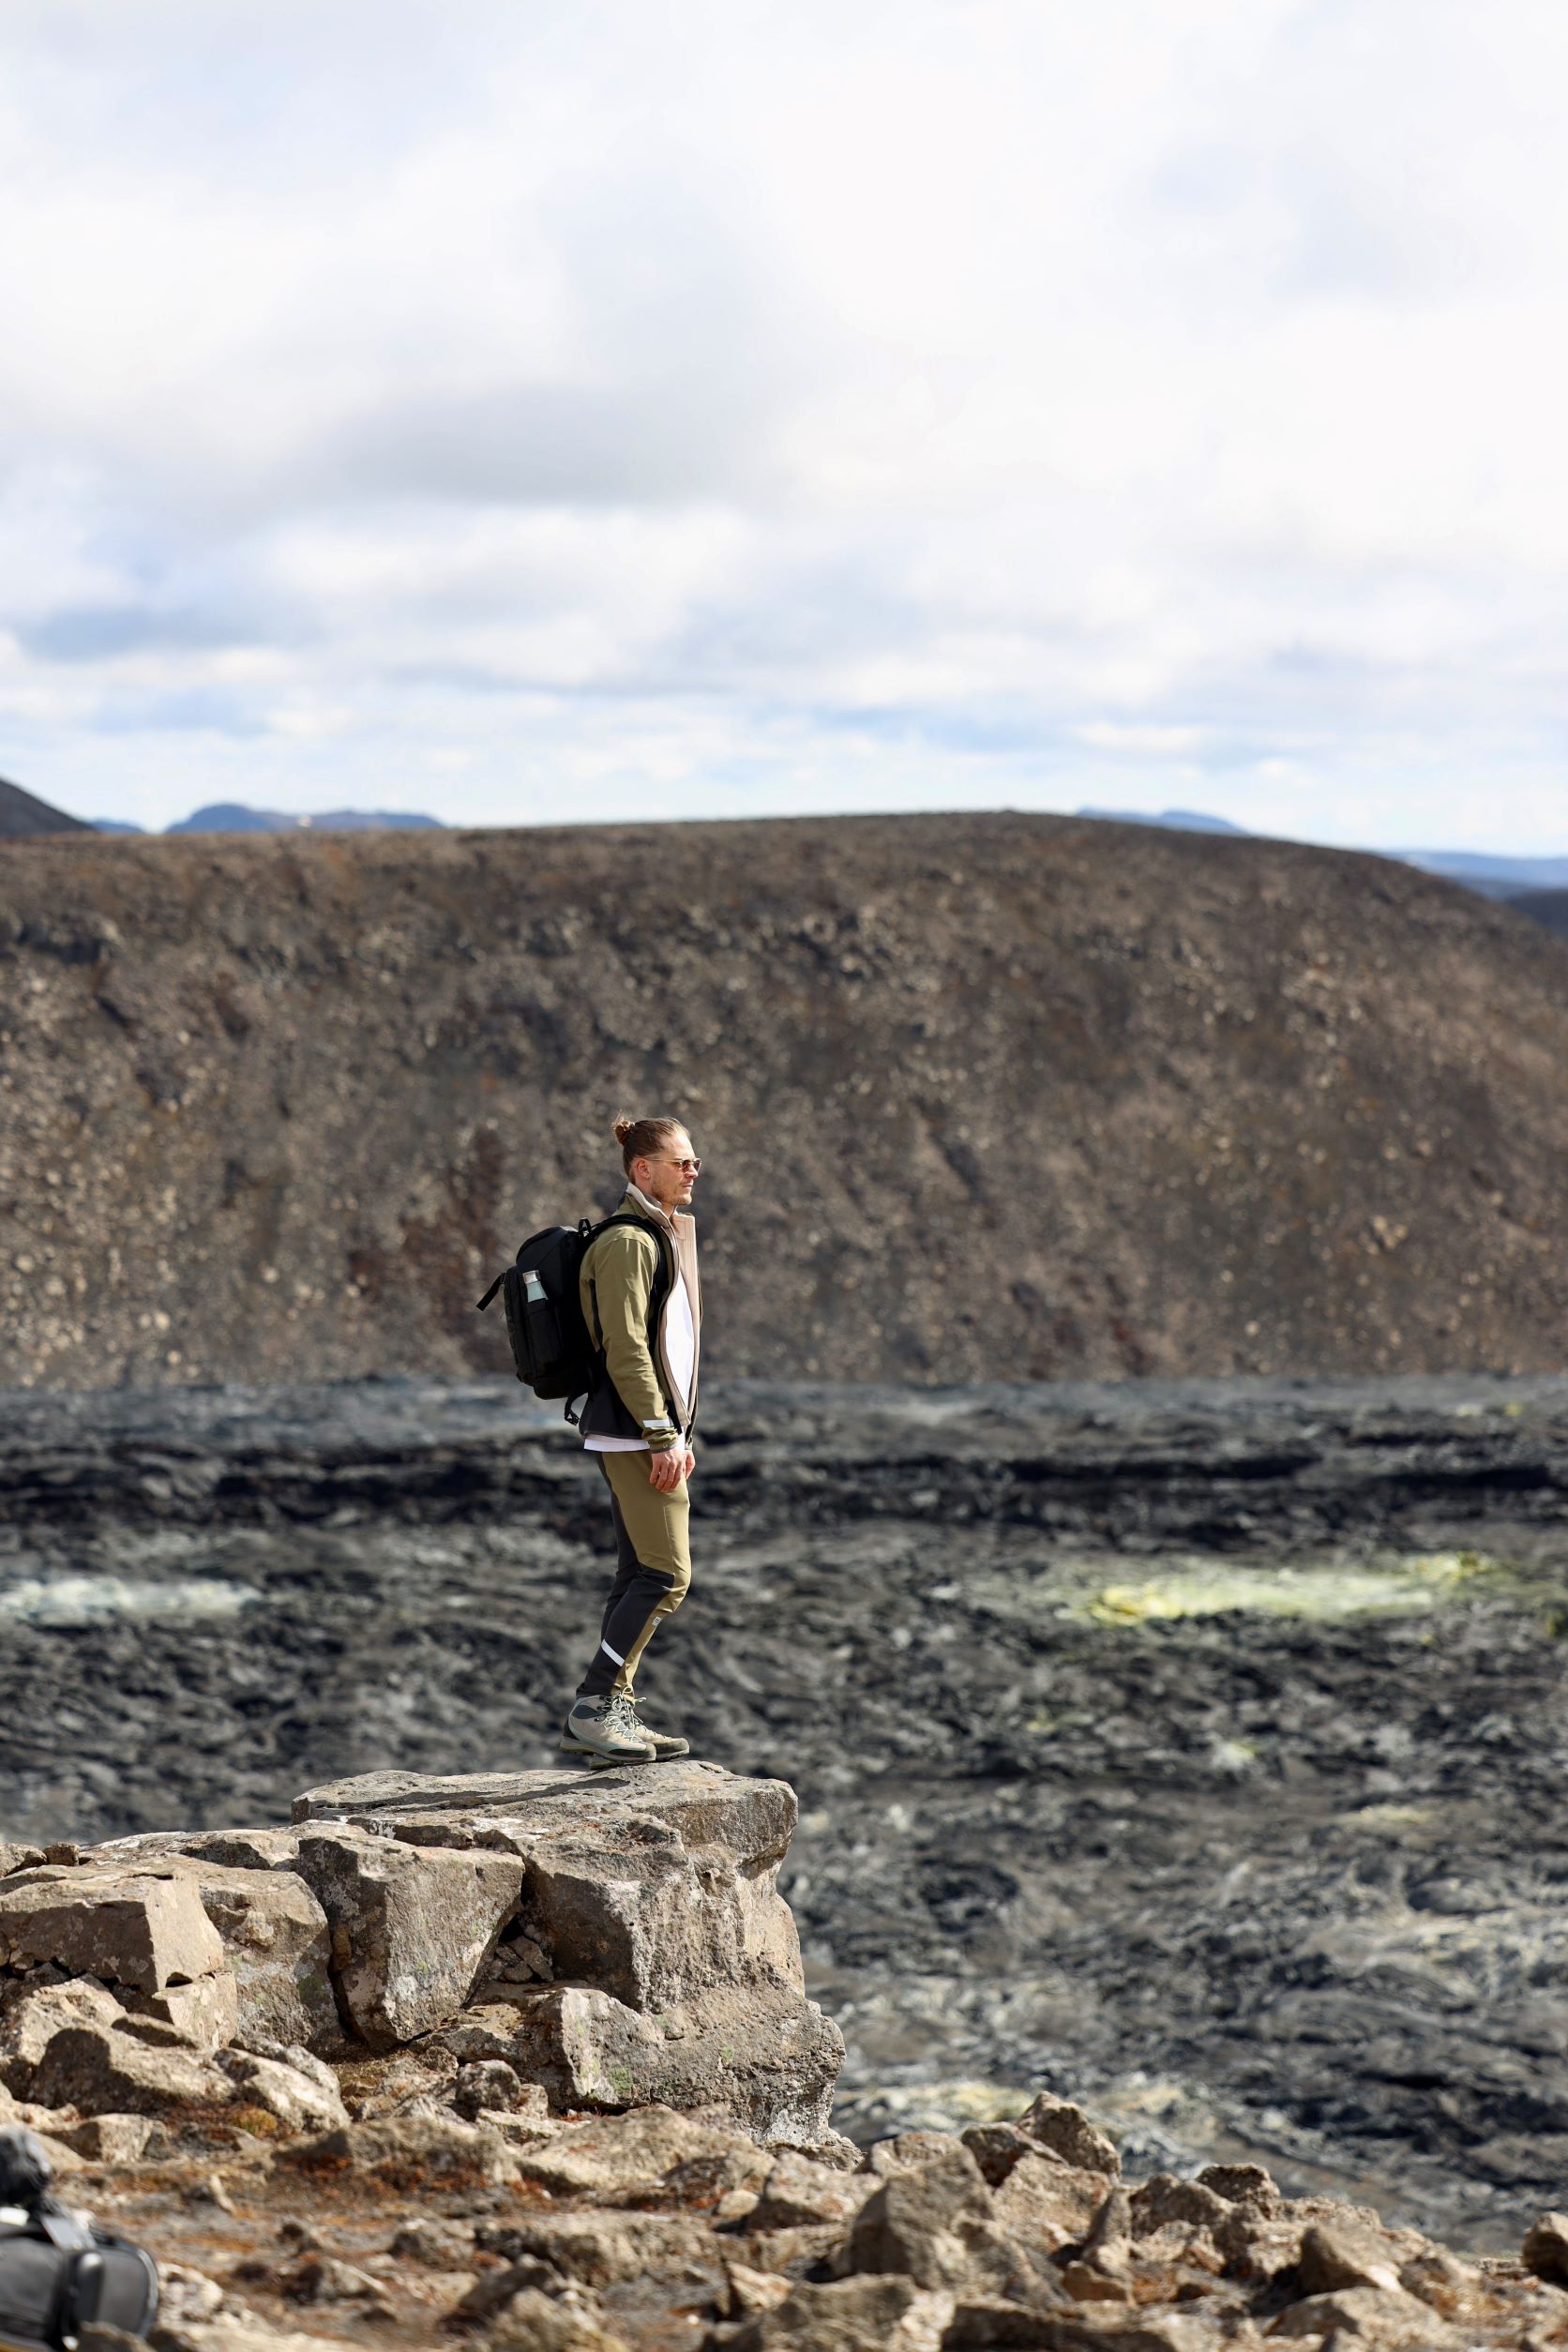 Rurik Gislason stands on rocks surrounded by lava